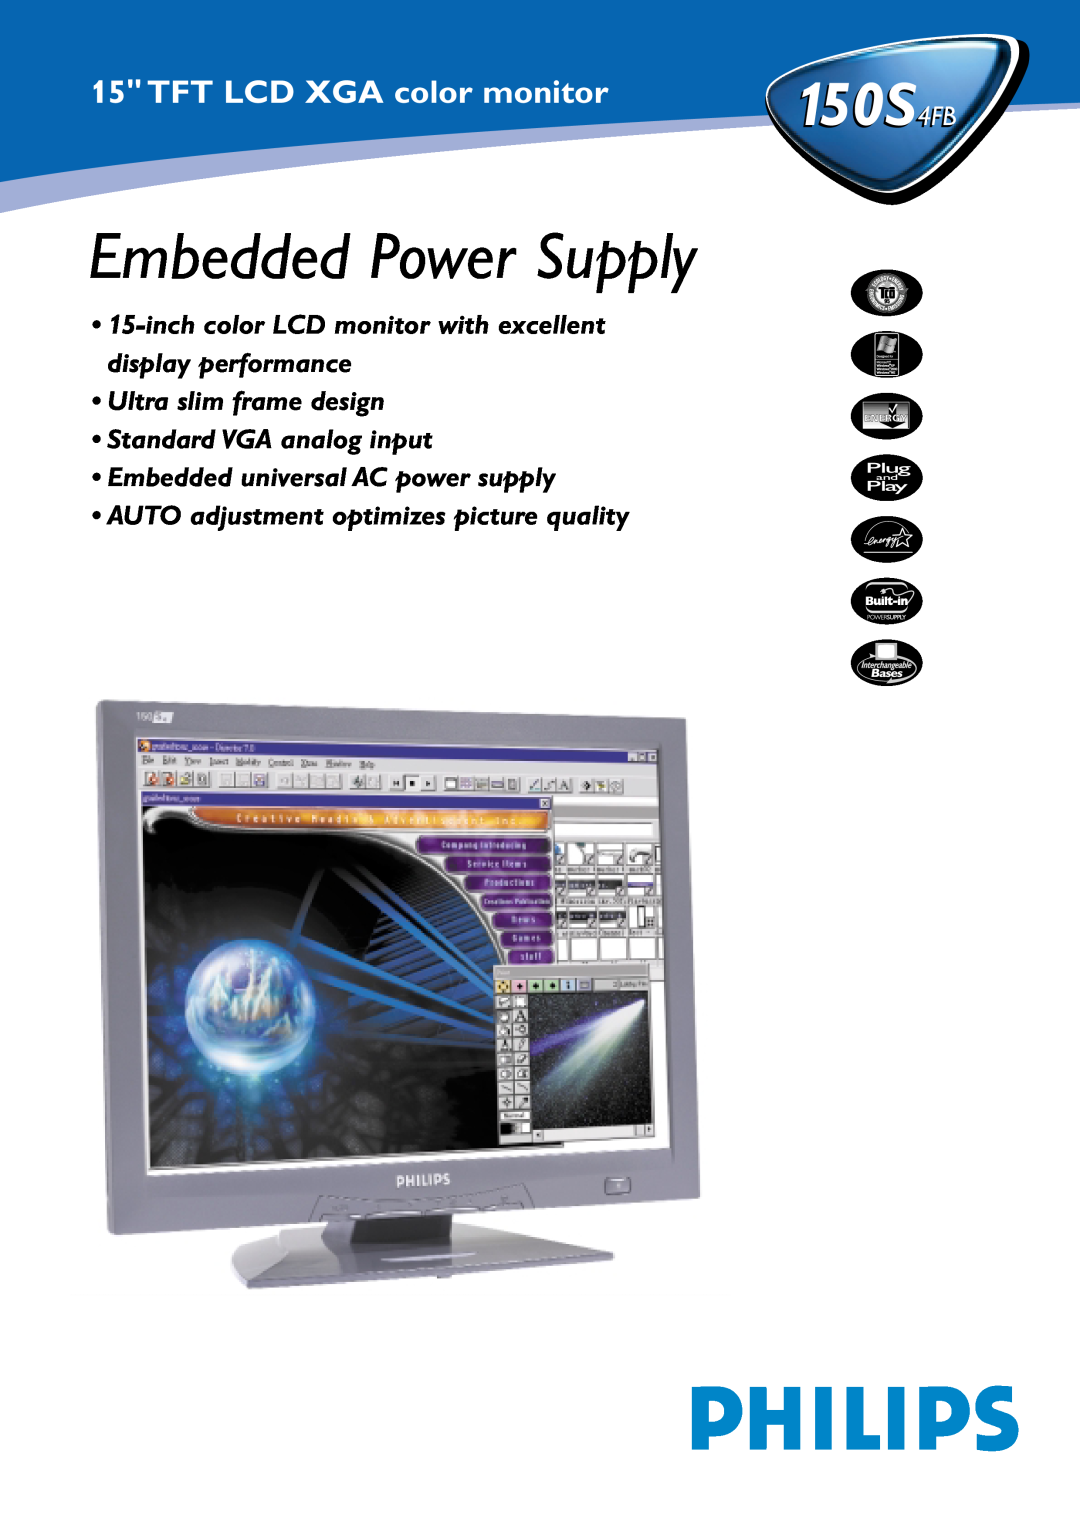 Philips 150S4FB manual TFT LCD XGA color monitor, Embedded Power Supply, • Ultra slim frame design 